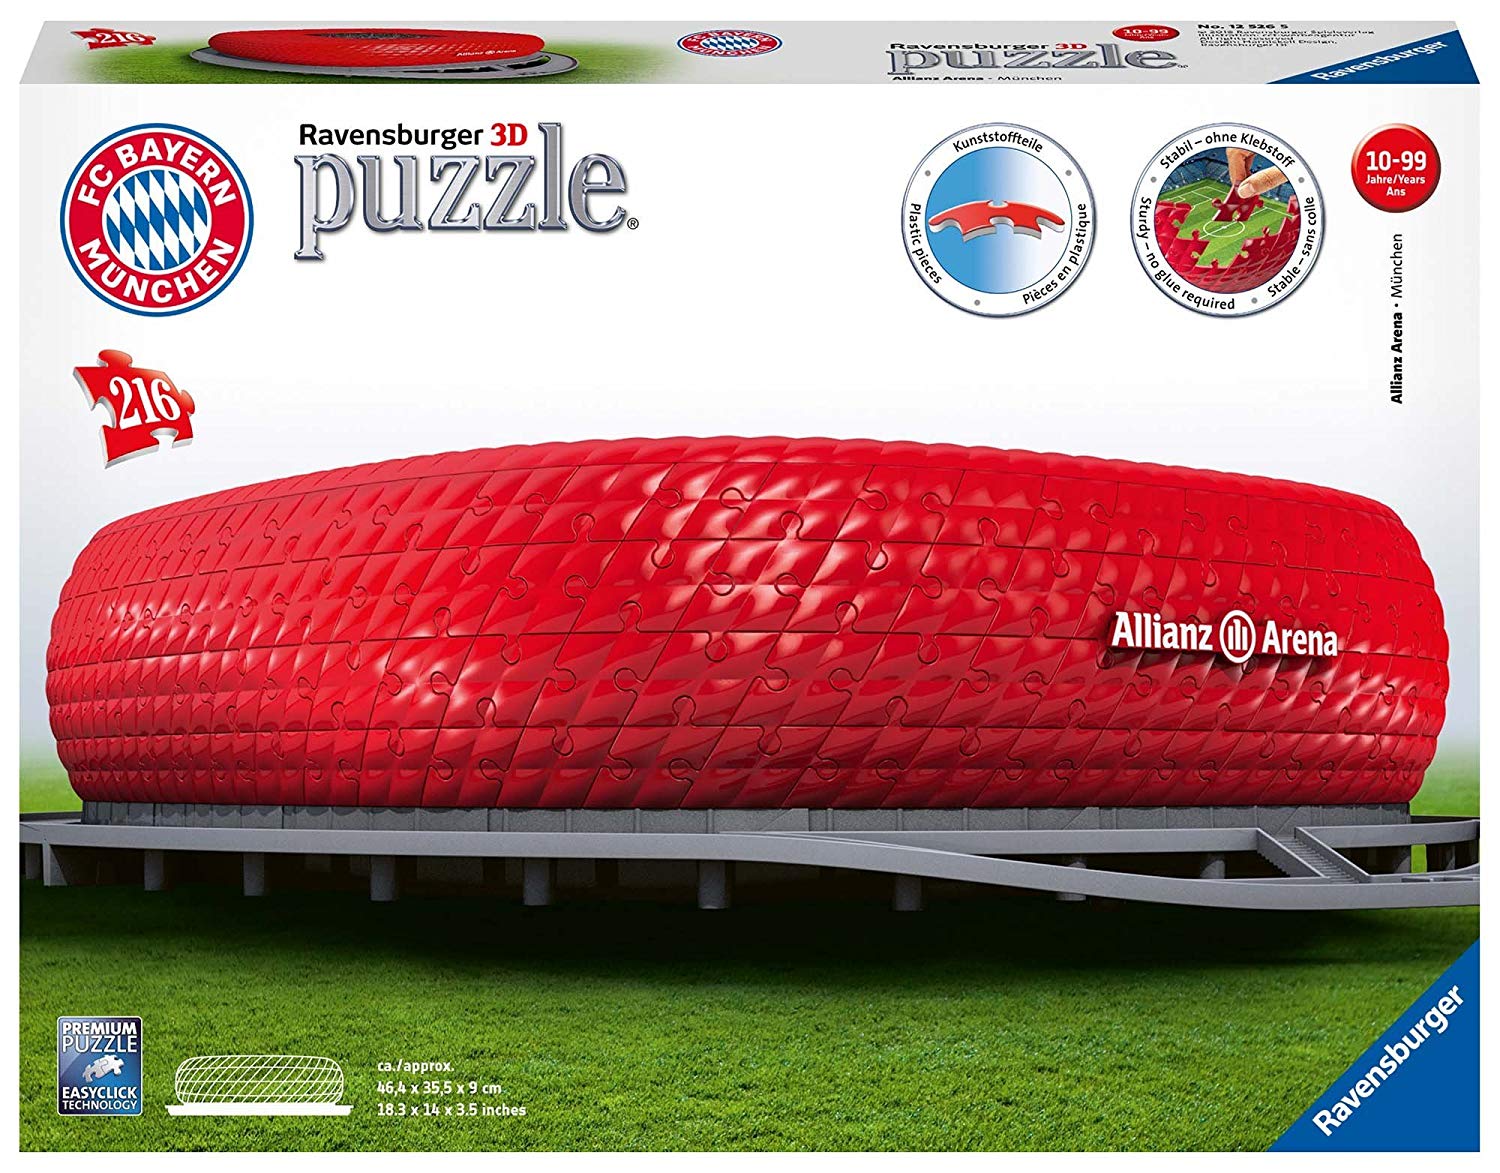 Ravensburger Fc Bayern Munich 3D Puzzle Allianz Arena